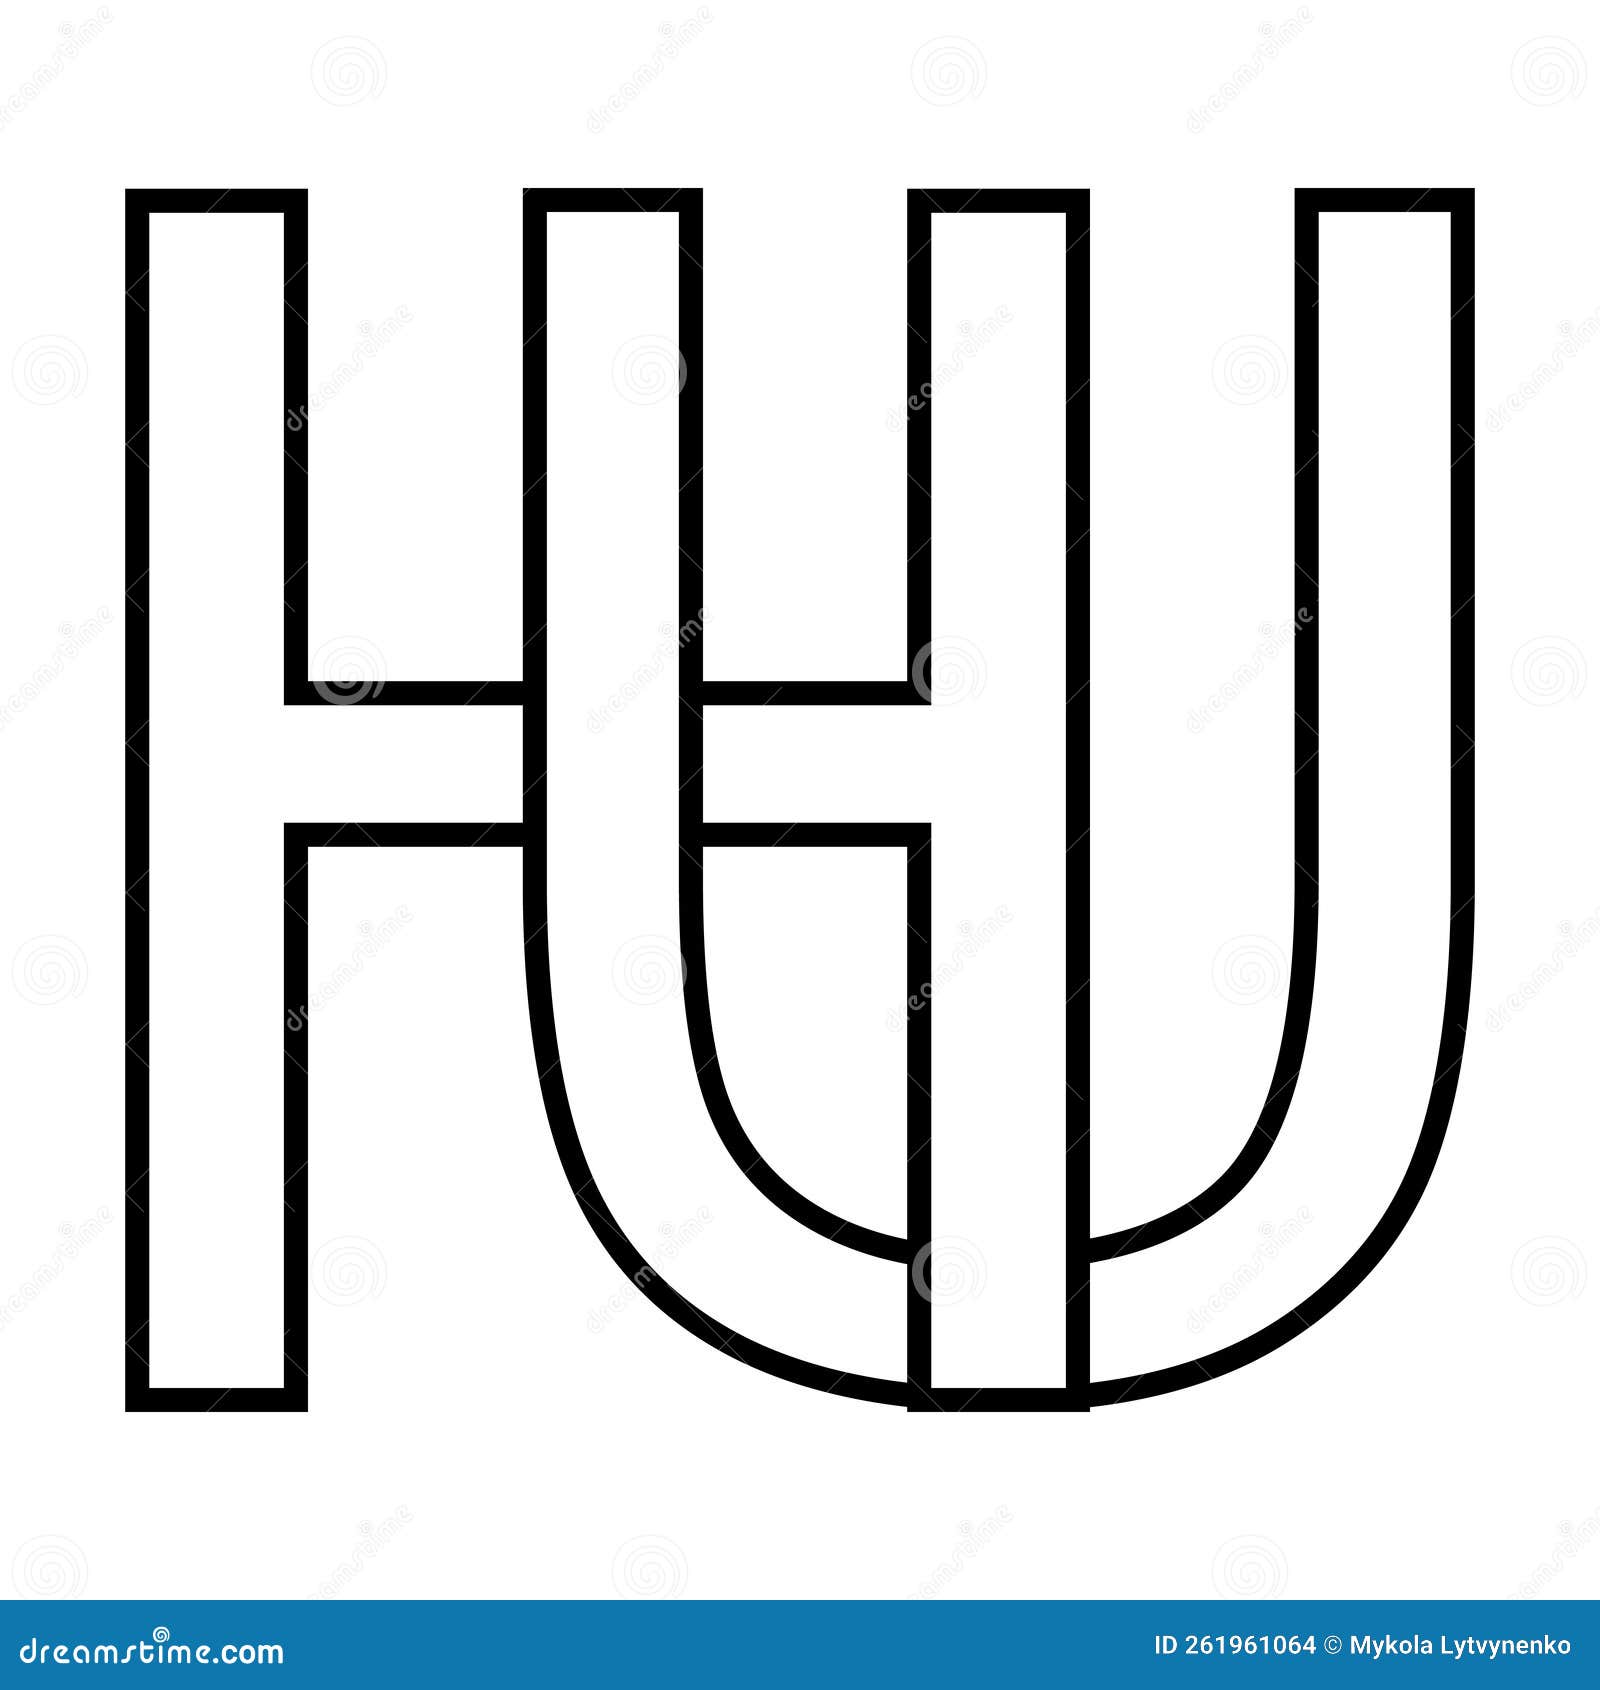 logo sign hu uh icon, nft interlaced letters u h